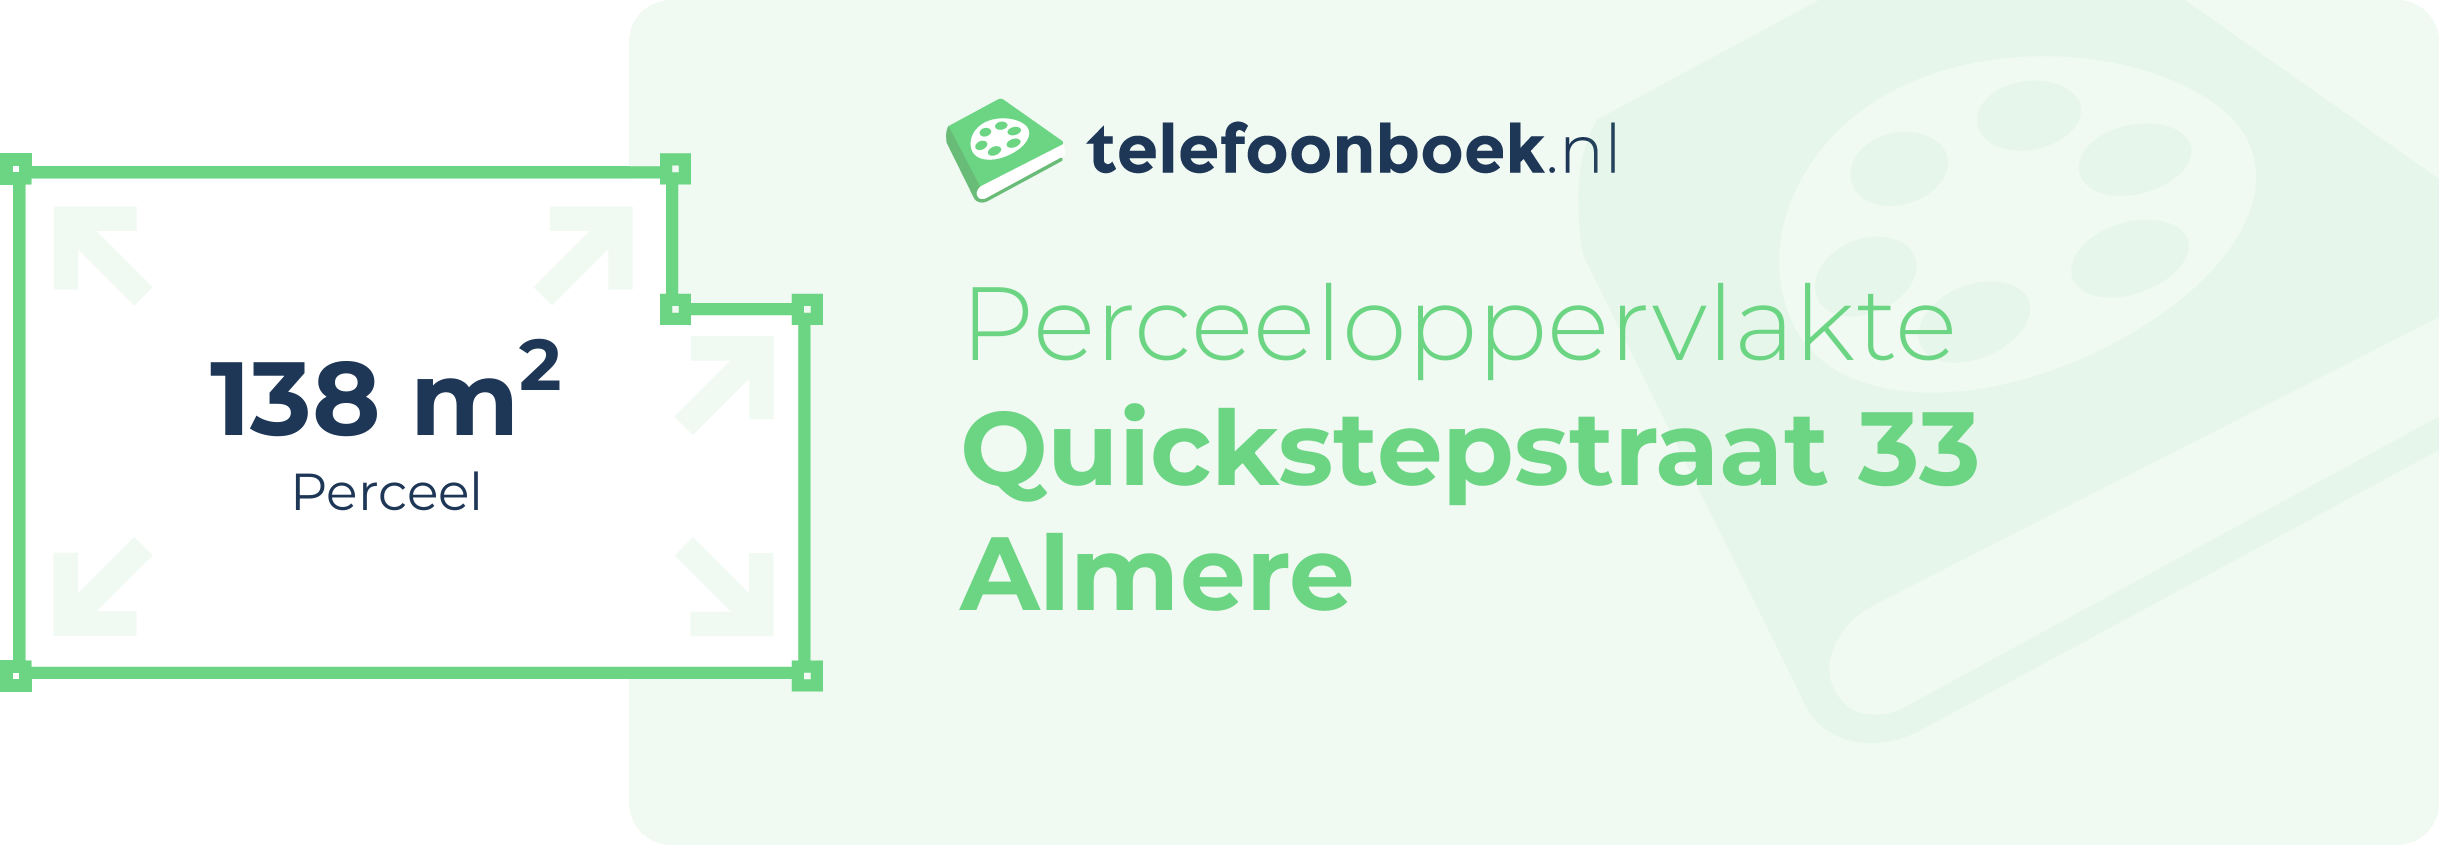 Perceeloppervlakte Quickstepstraat 33 Almere